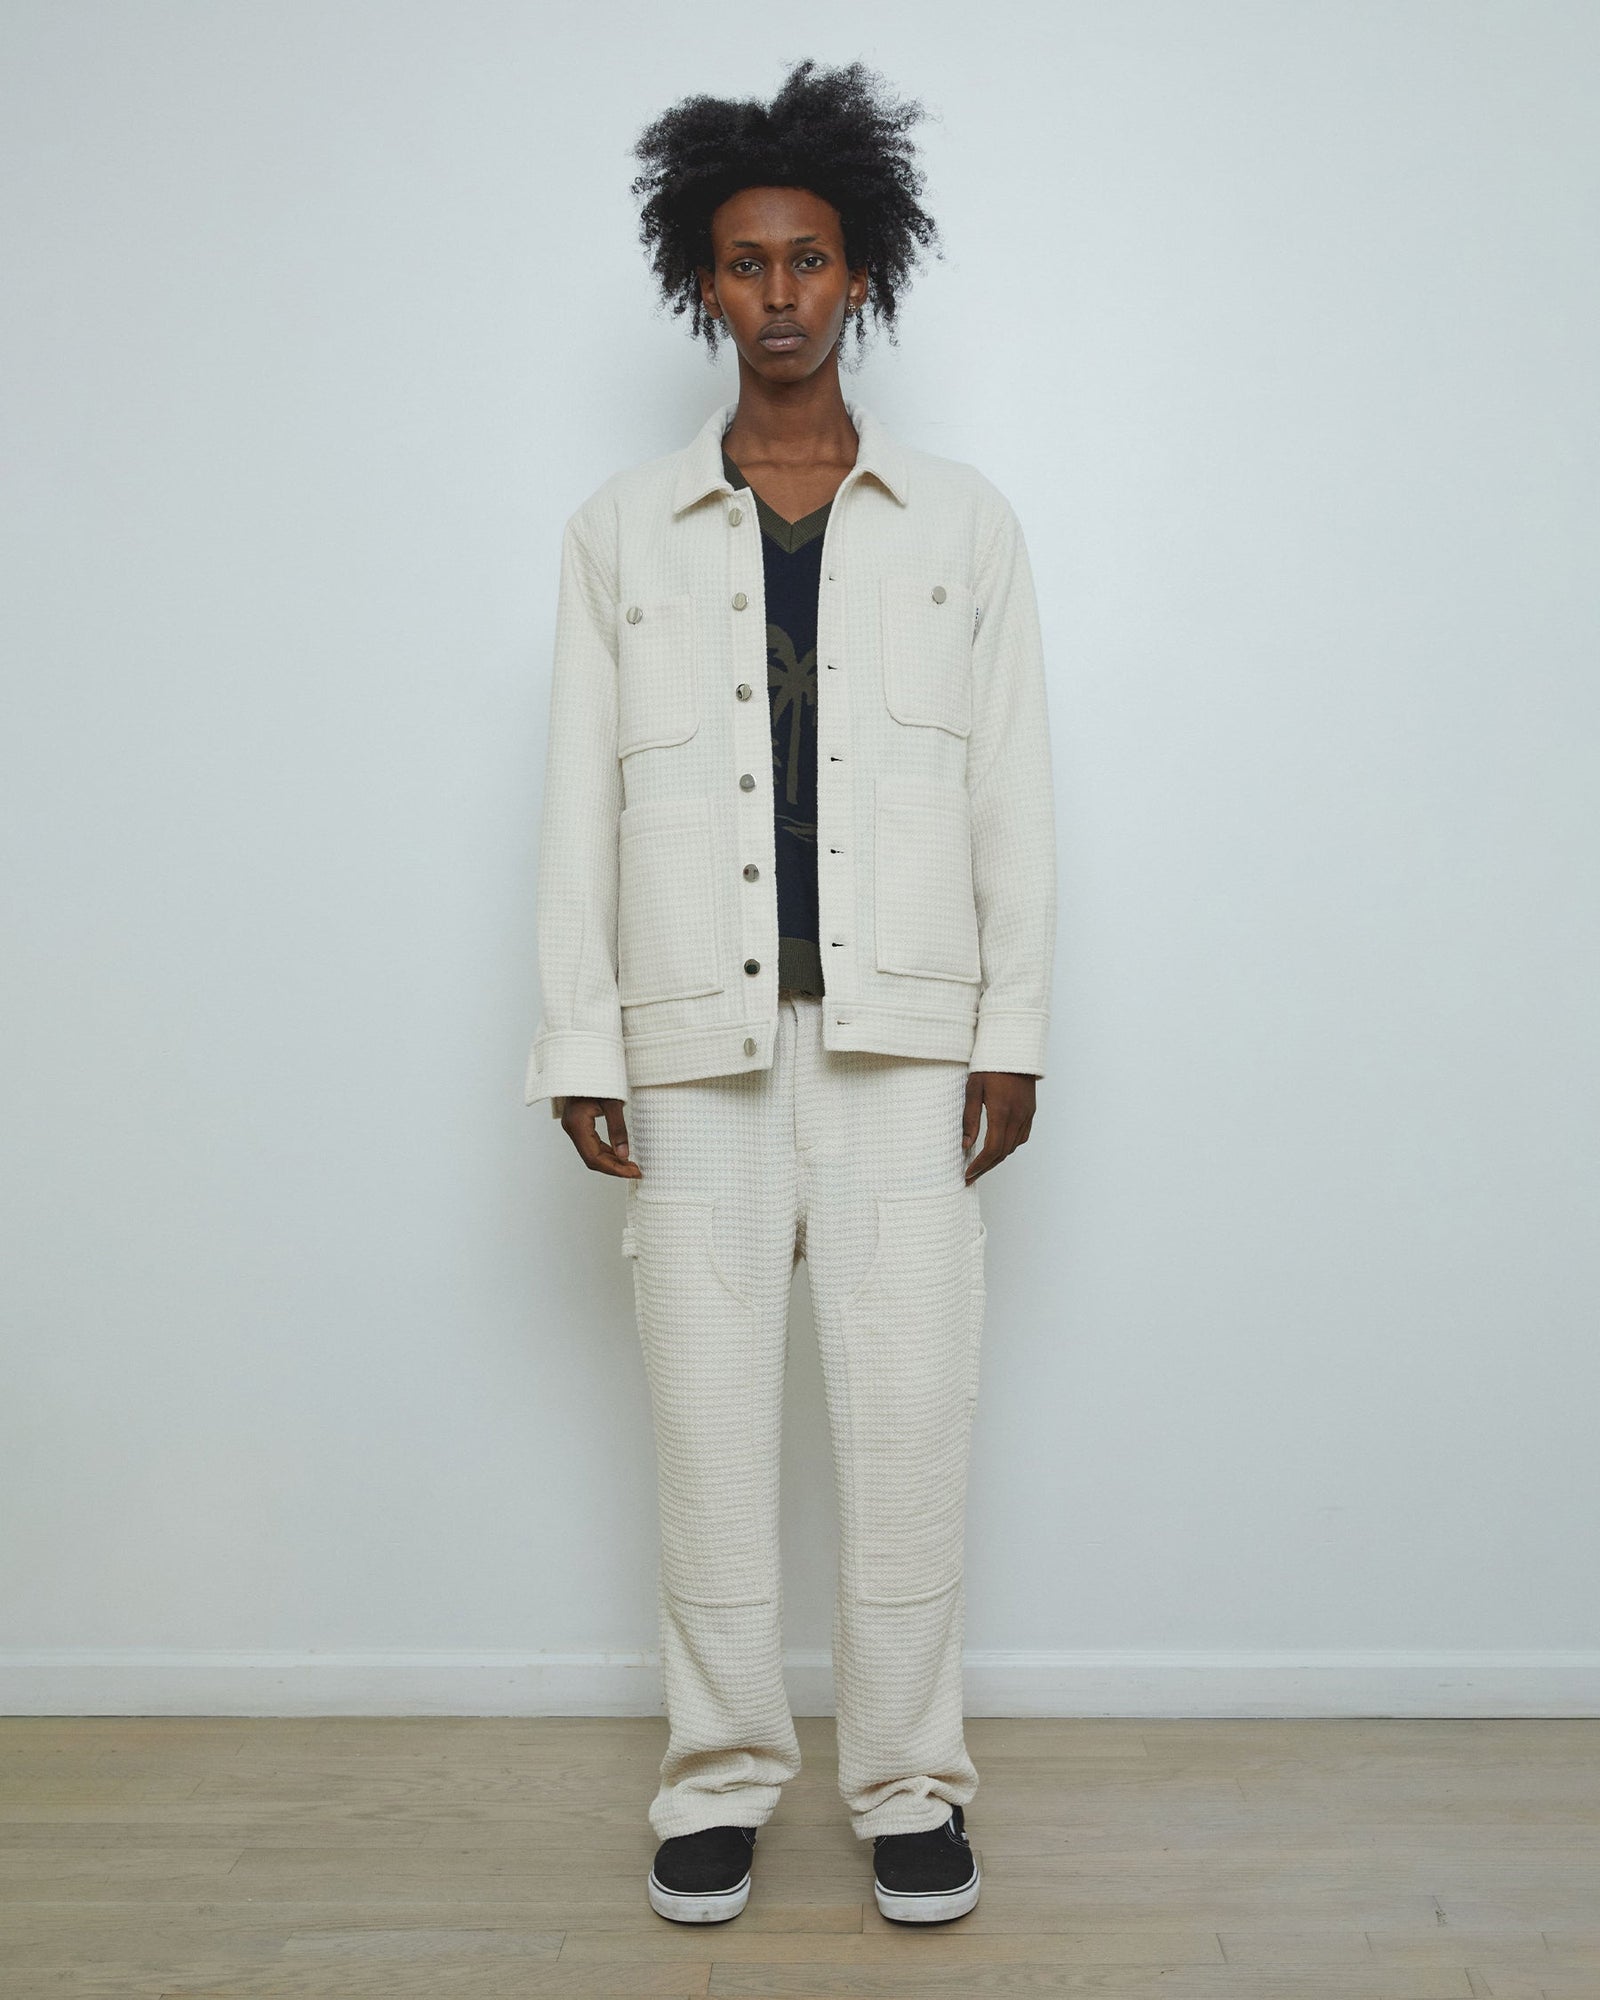 Cream Work Jacket Atlantic - mens designer fashion jackets by Krost